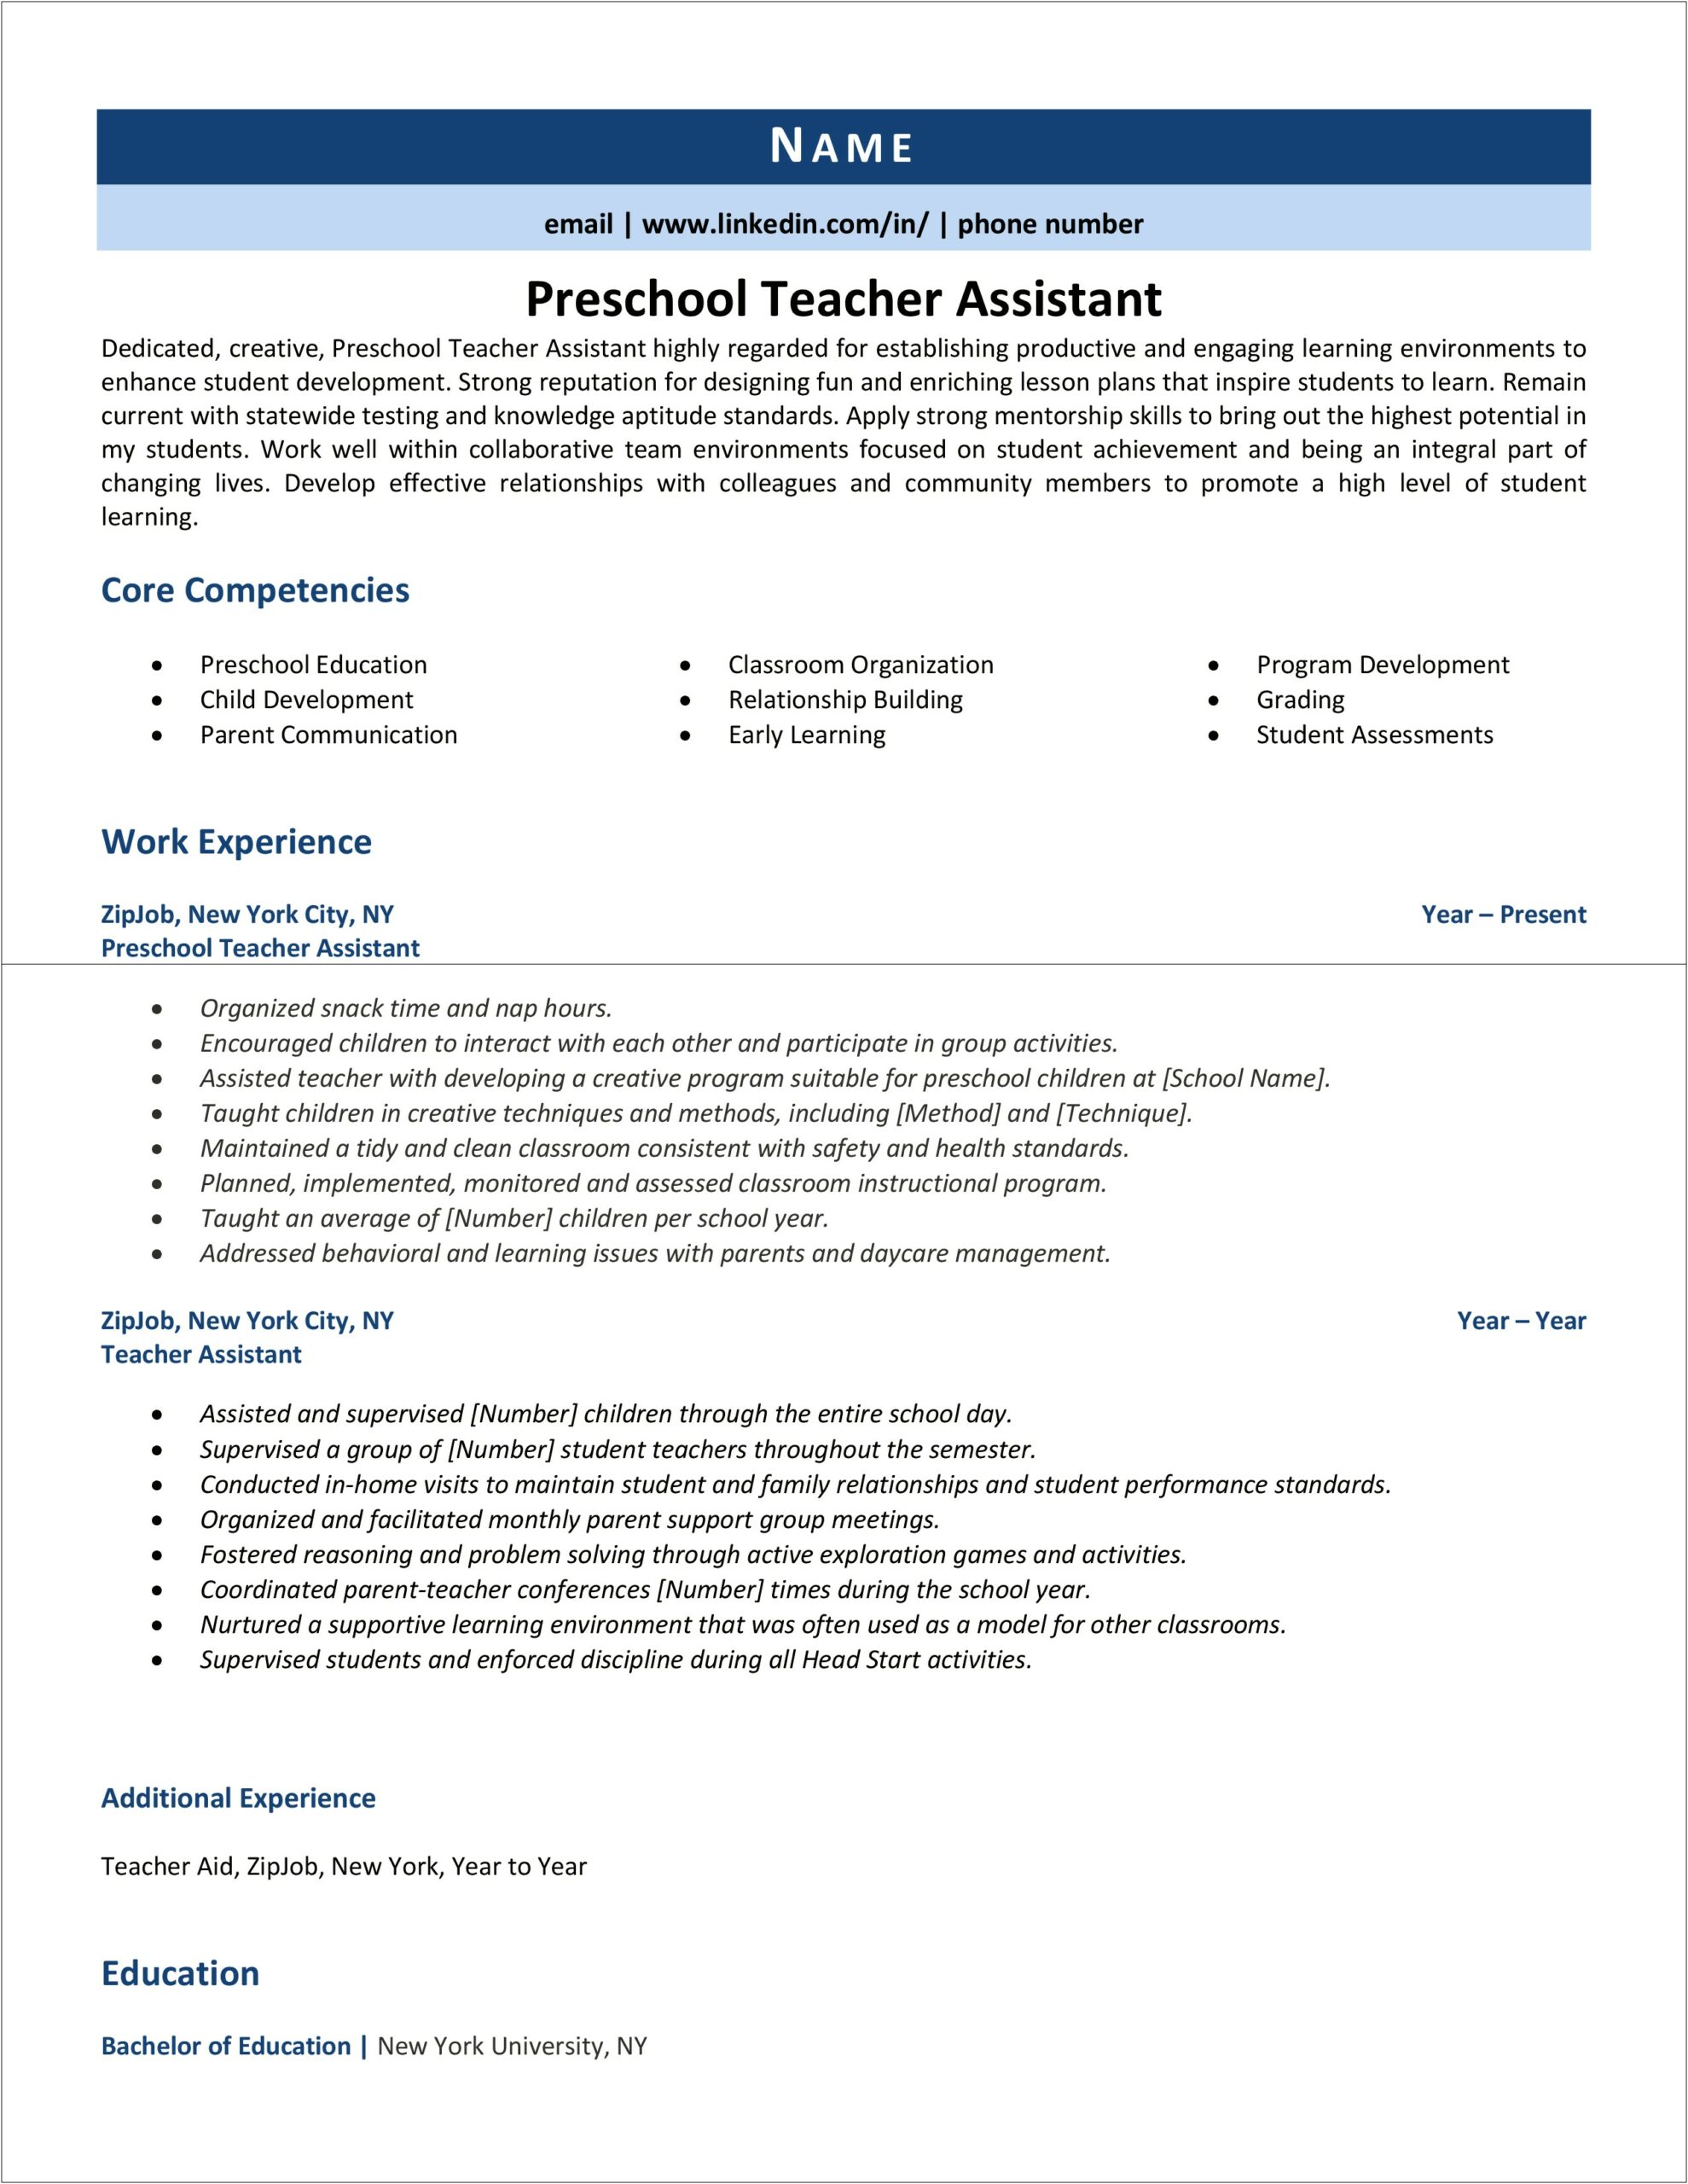 Sample Resume For Preschool Teacher With Experience